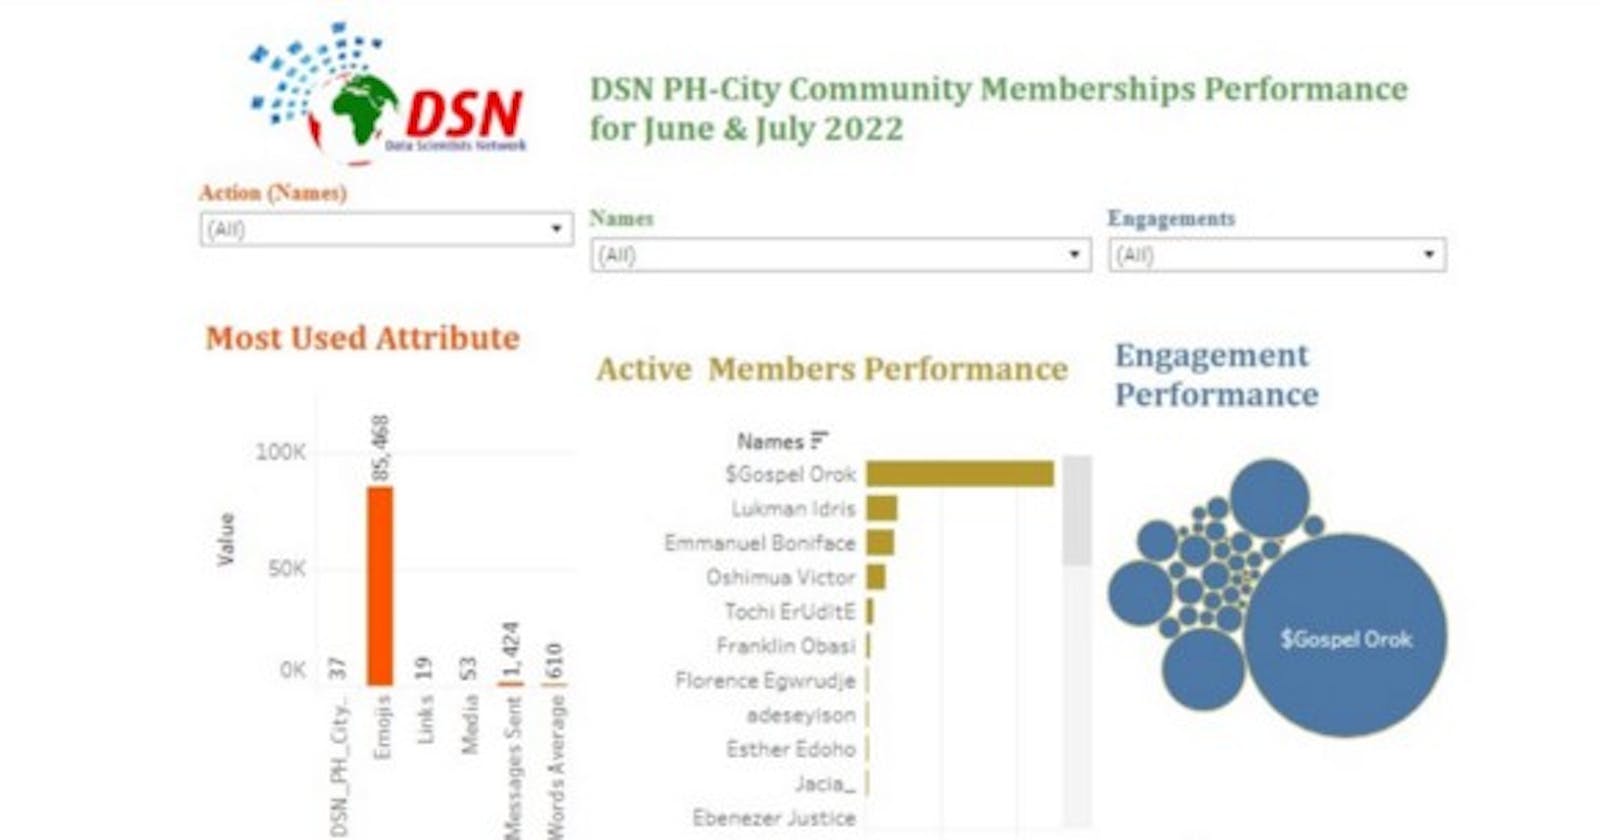 WhatsApp Analysis of DSN PH-City AI+ Community